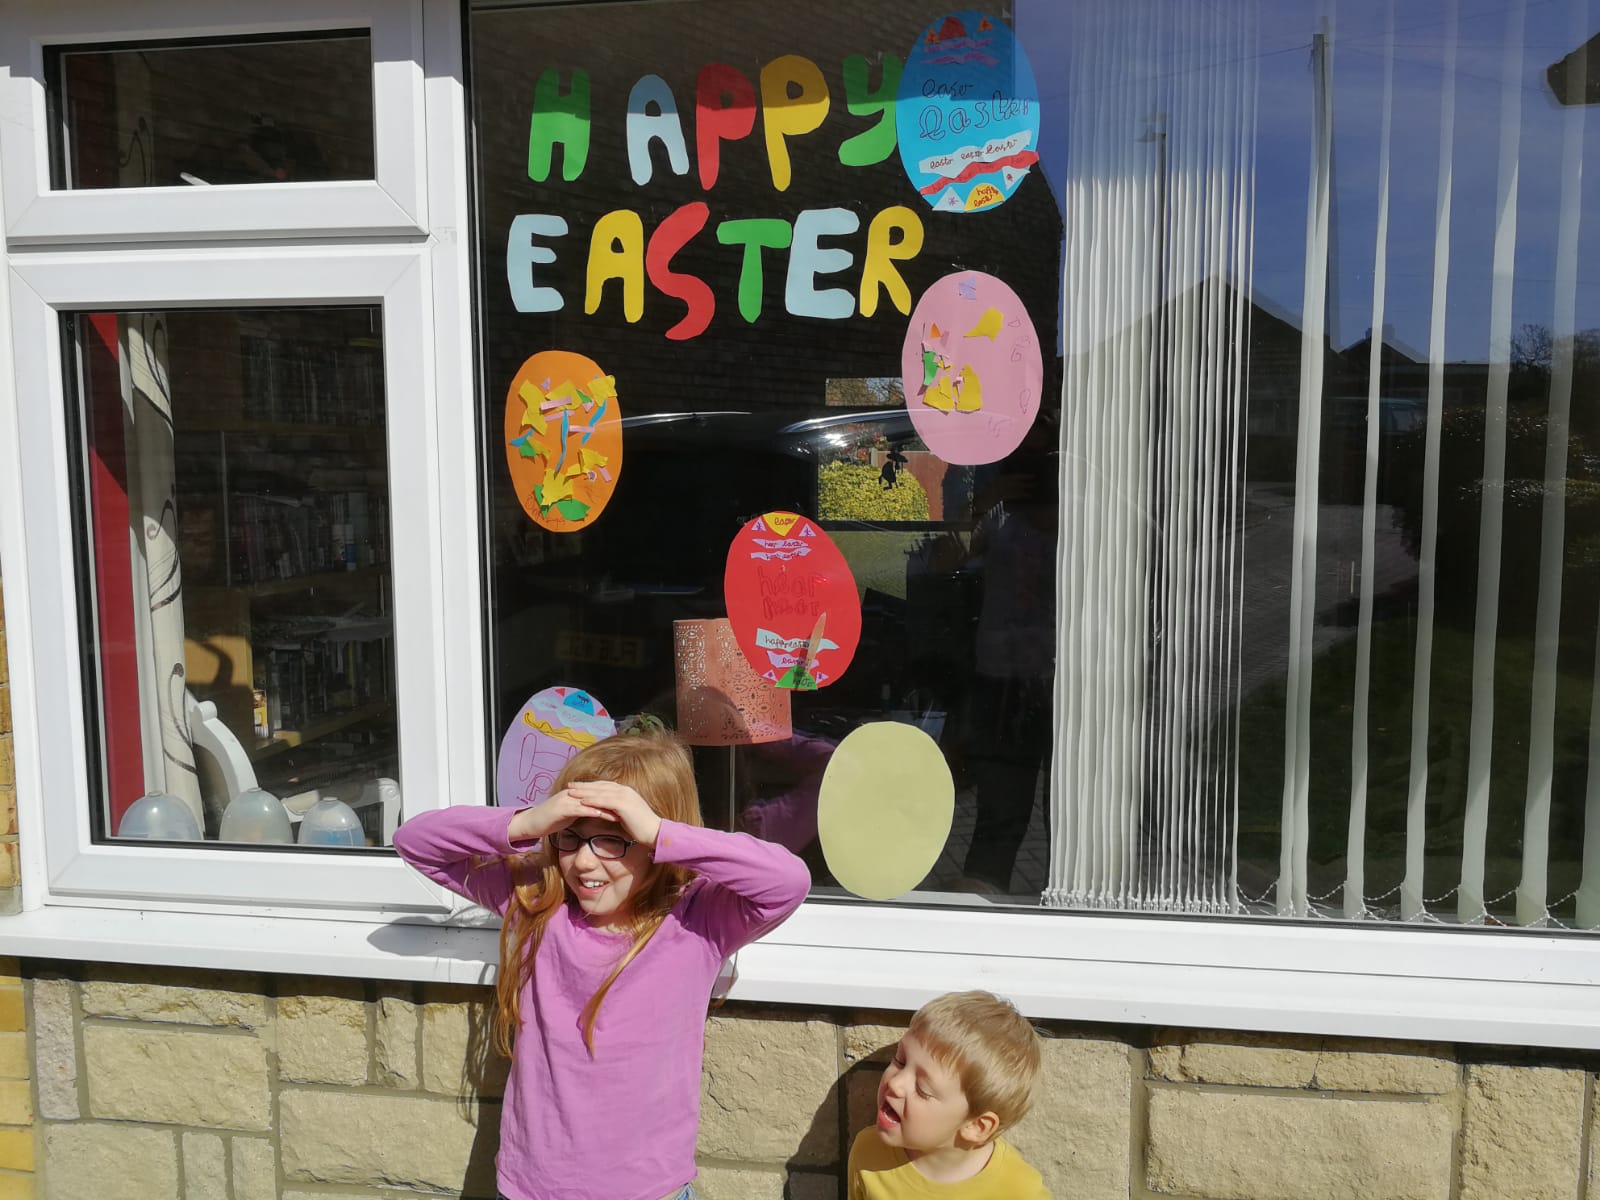 Happy Easter window display